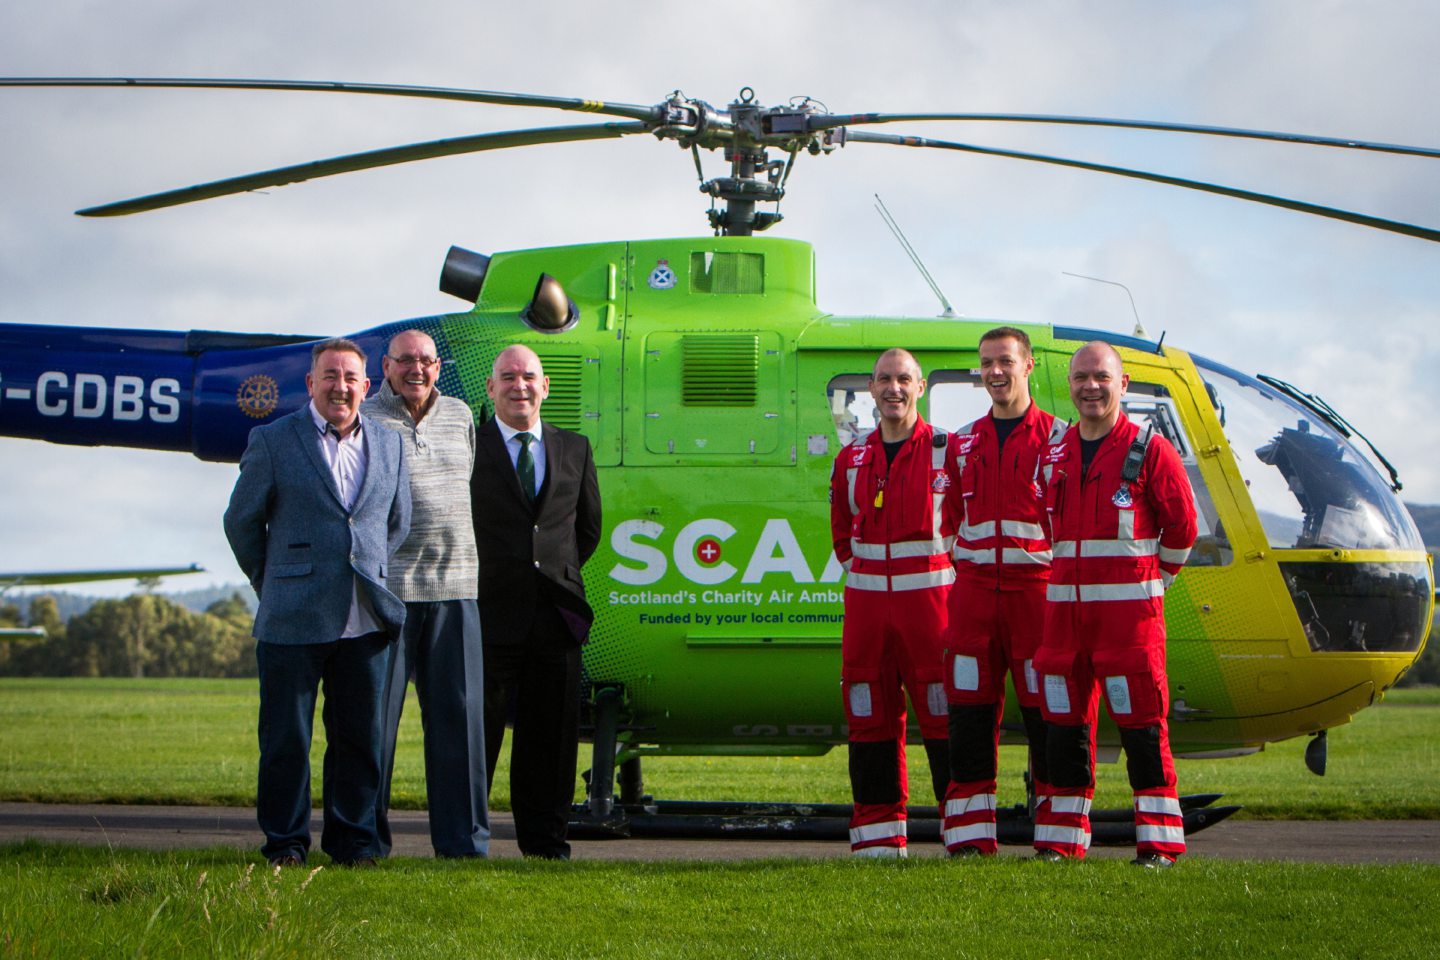 Former paramedics Ian Golding, Robert Devine and Gerry Kelly alongside current paramedics John Pritchard, Mark Tynan and John Salmond.